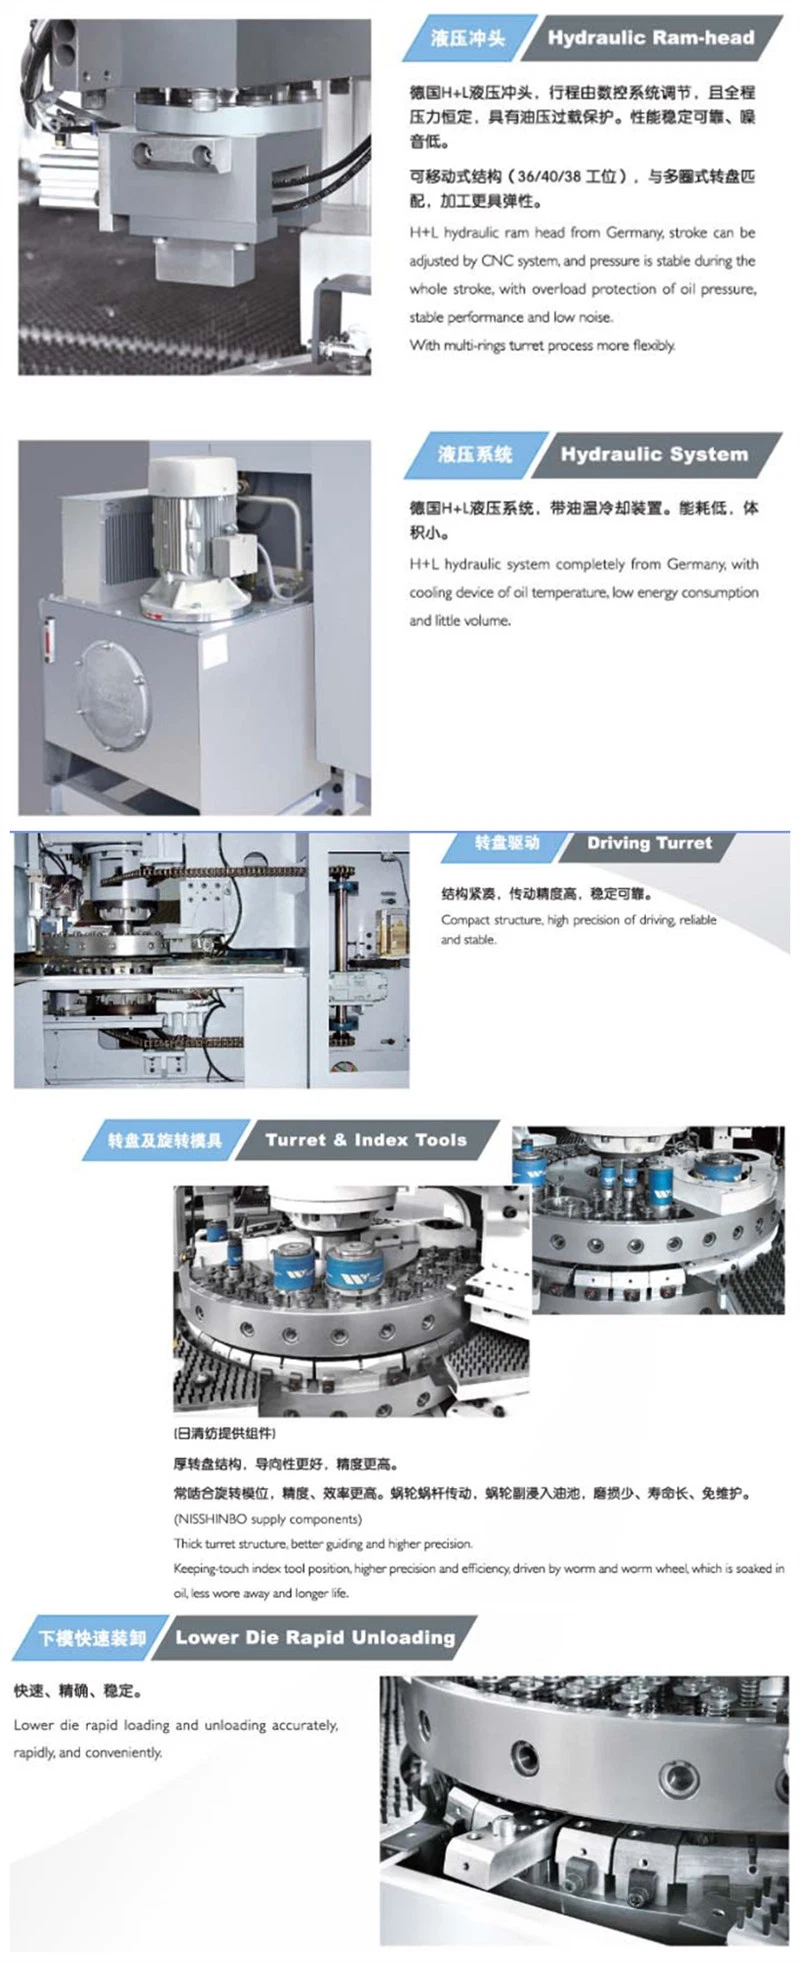 Finn Power CNC Turret Punch Press Lillbacka F5-25 30 Tons Punching Machine